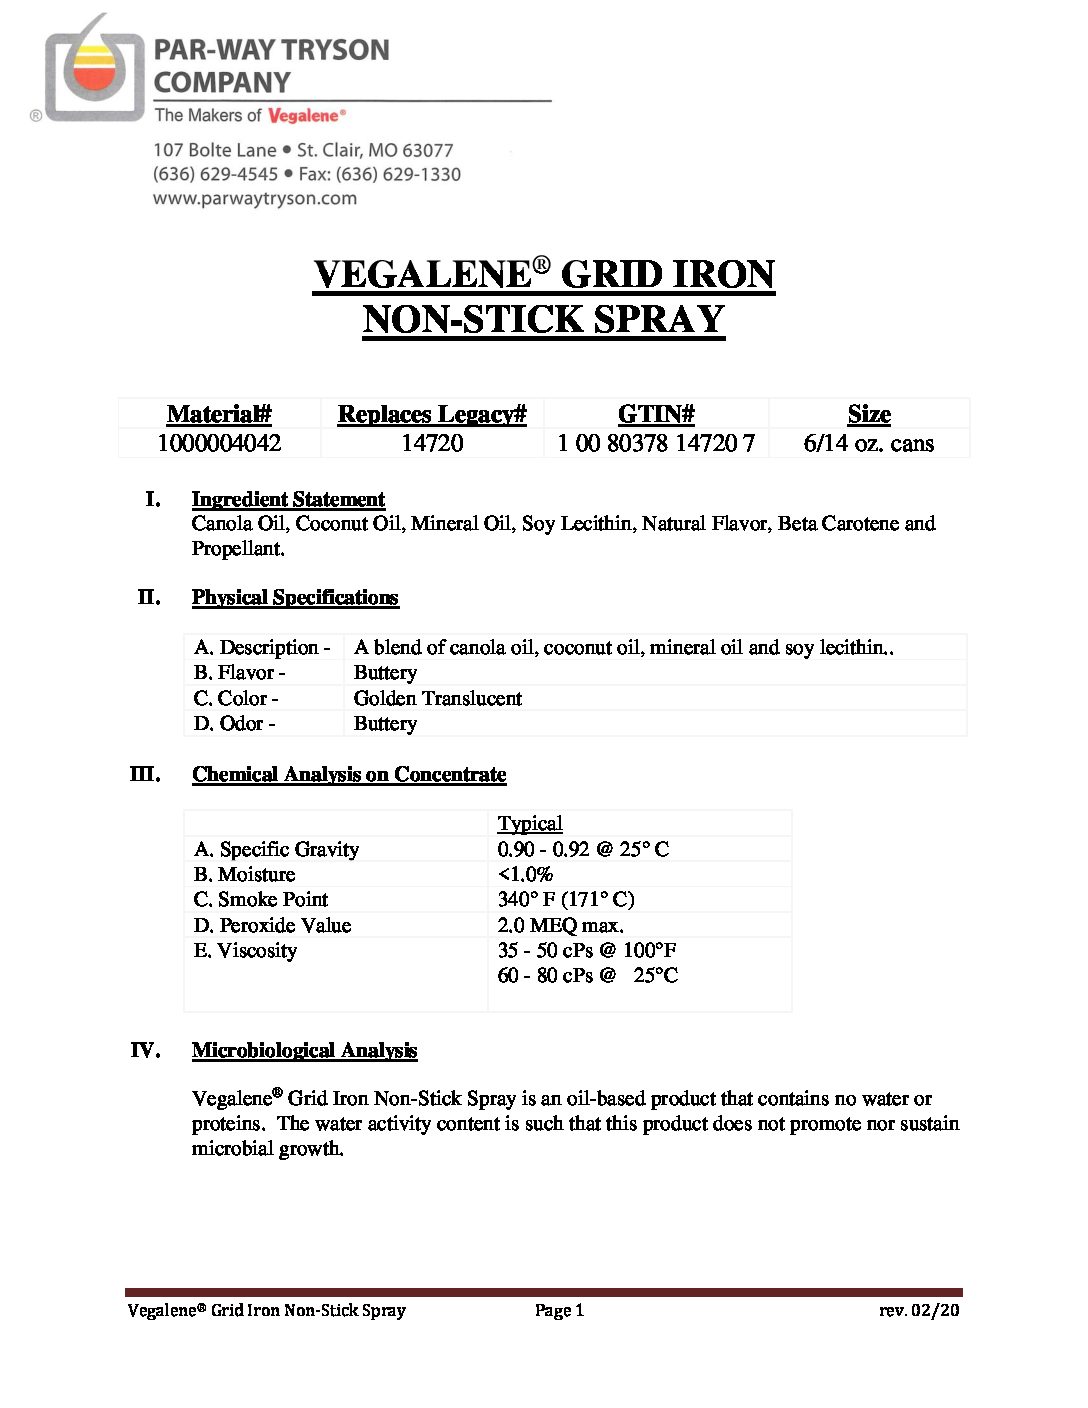 PDS – 1000004042 (14720) – Vegalene Grid Iron Non-Stick Spray 2020